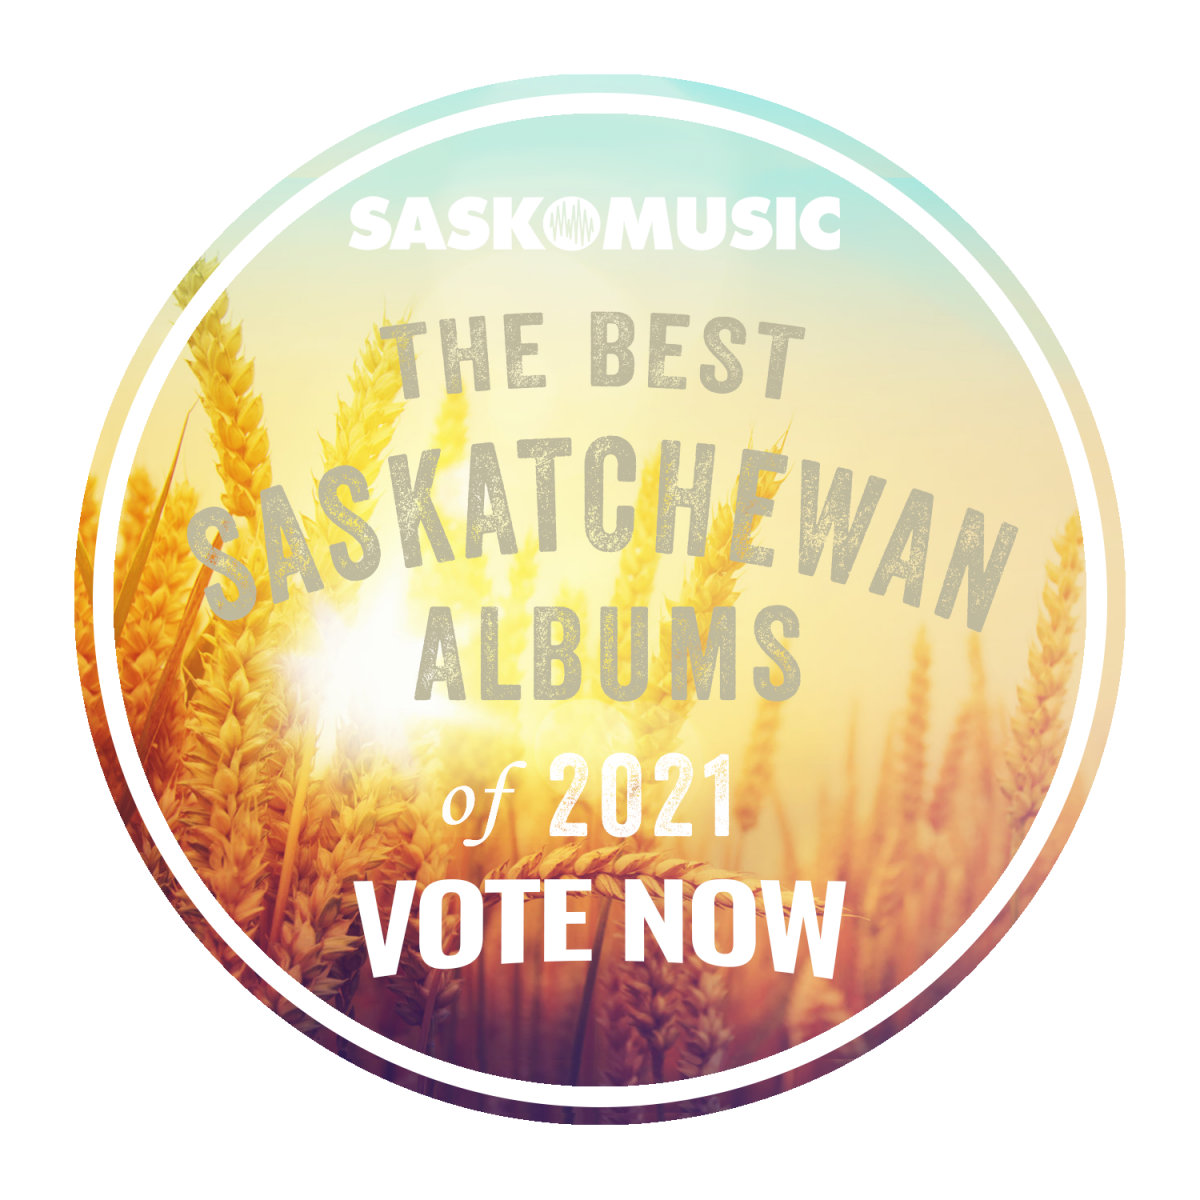 The Best Saskatchewan Albums of 2021